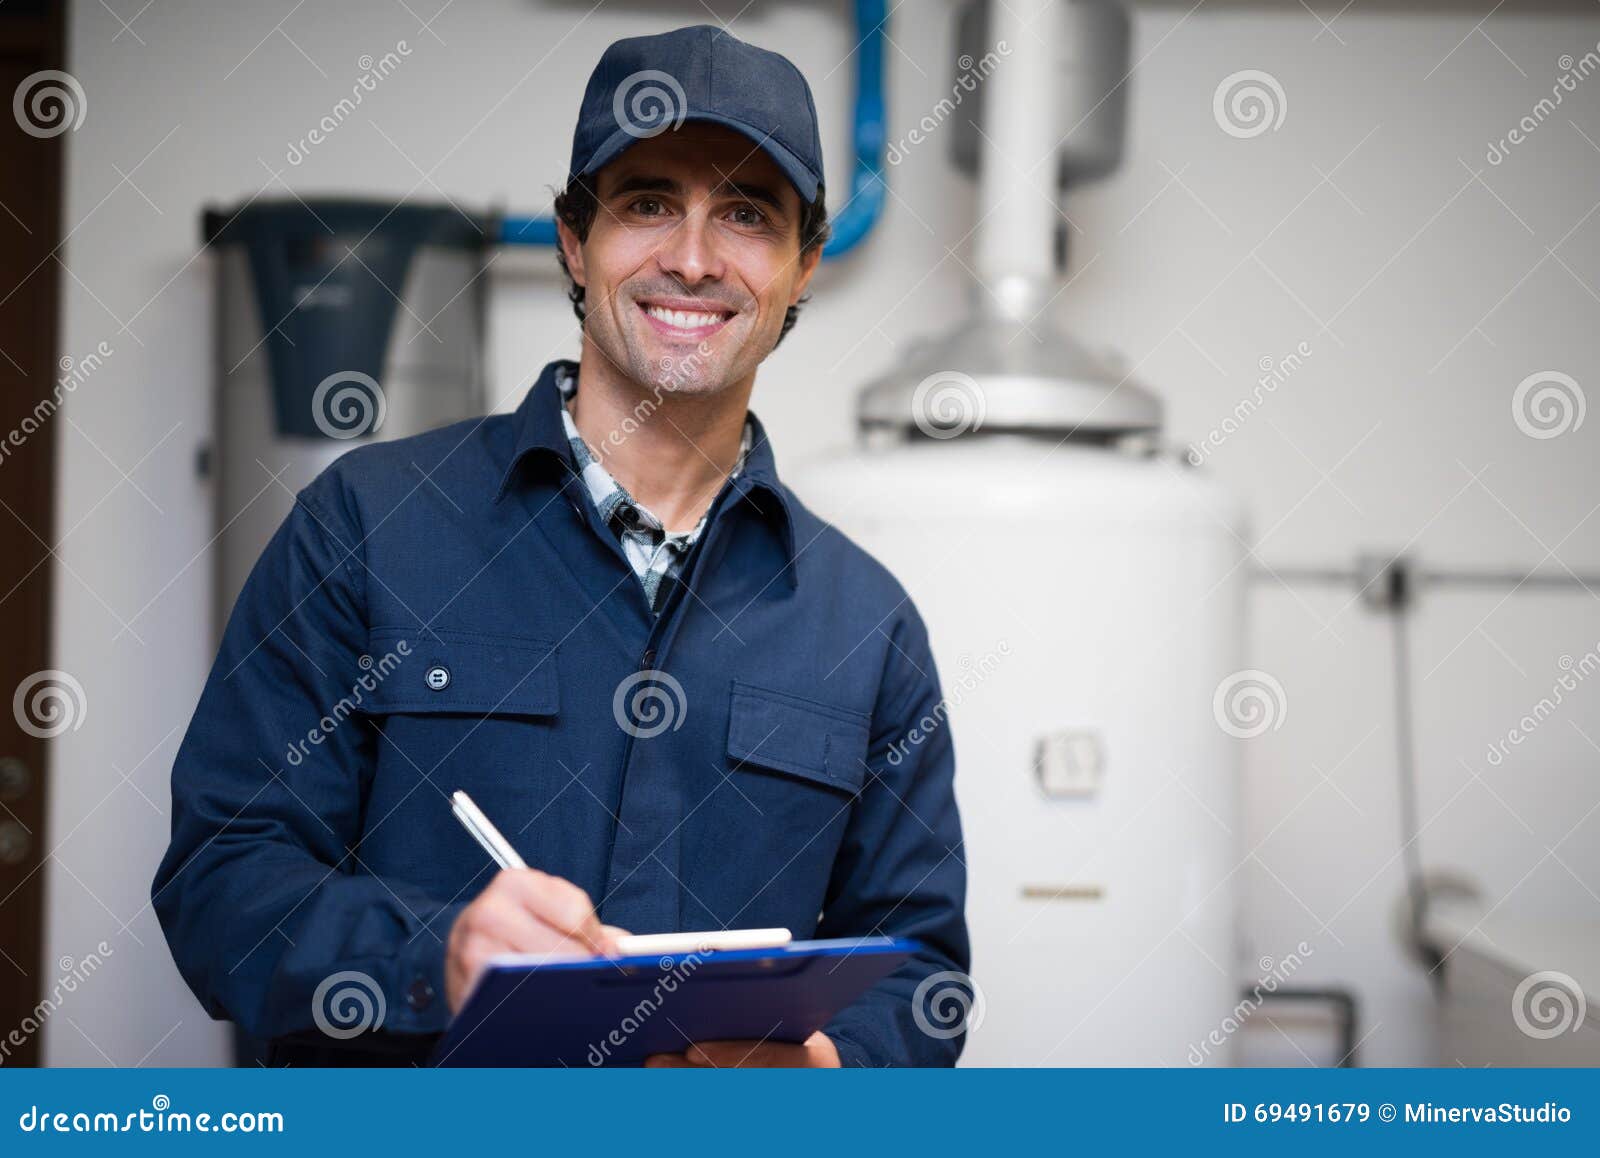 smiling technician servicing an hot-water heater